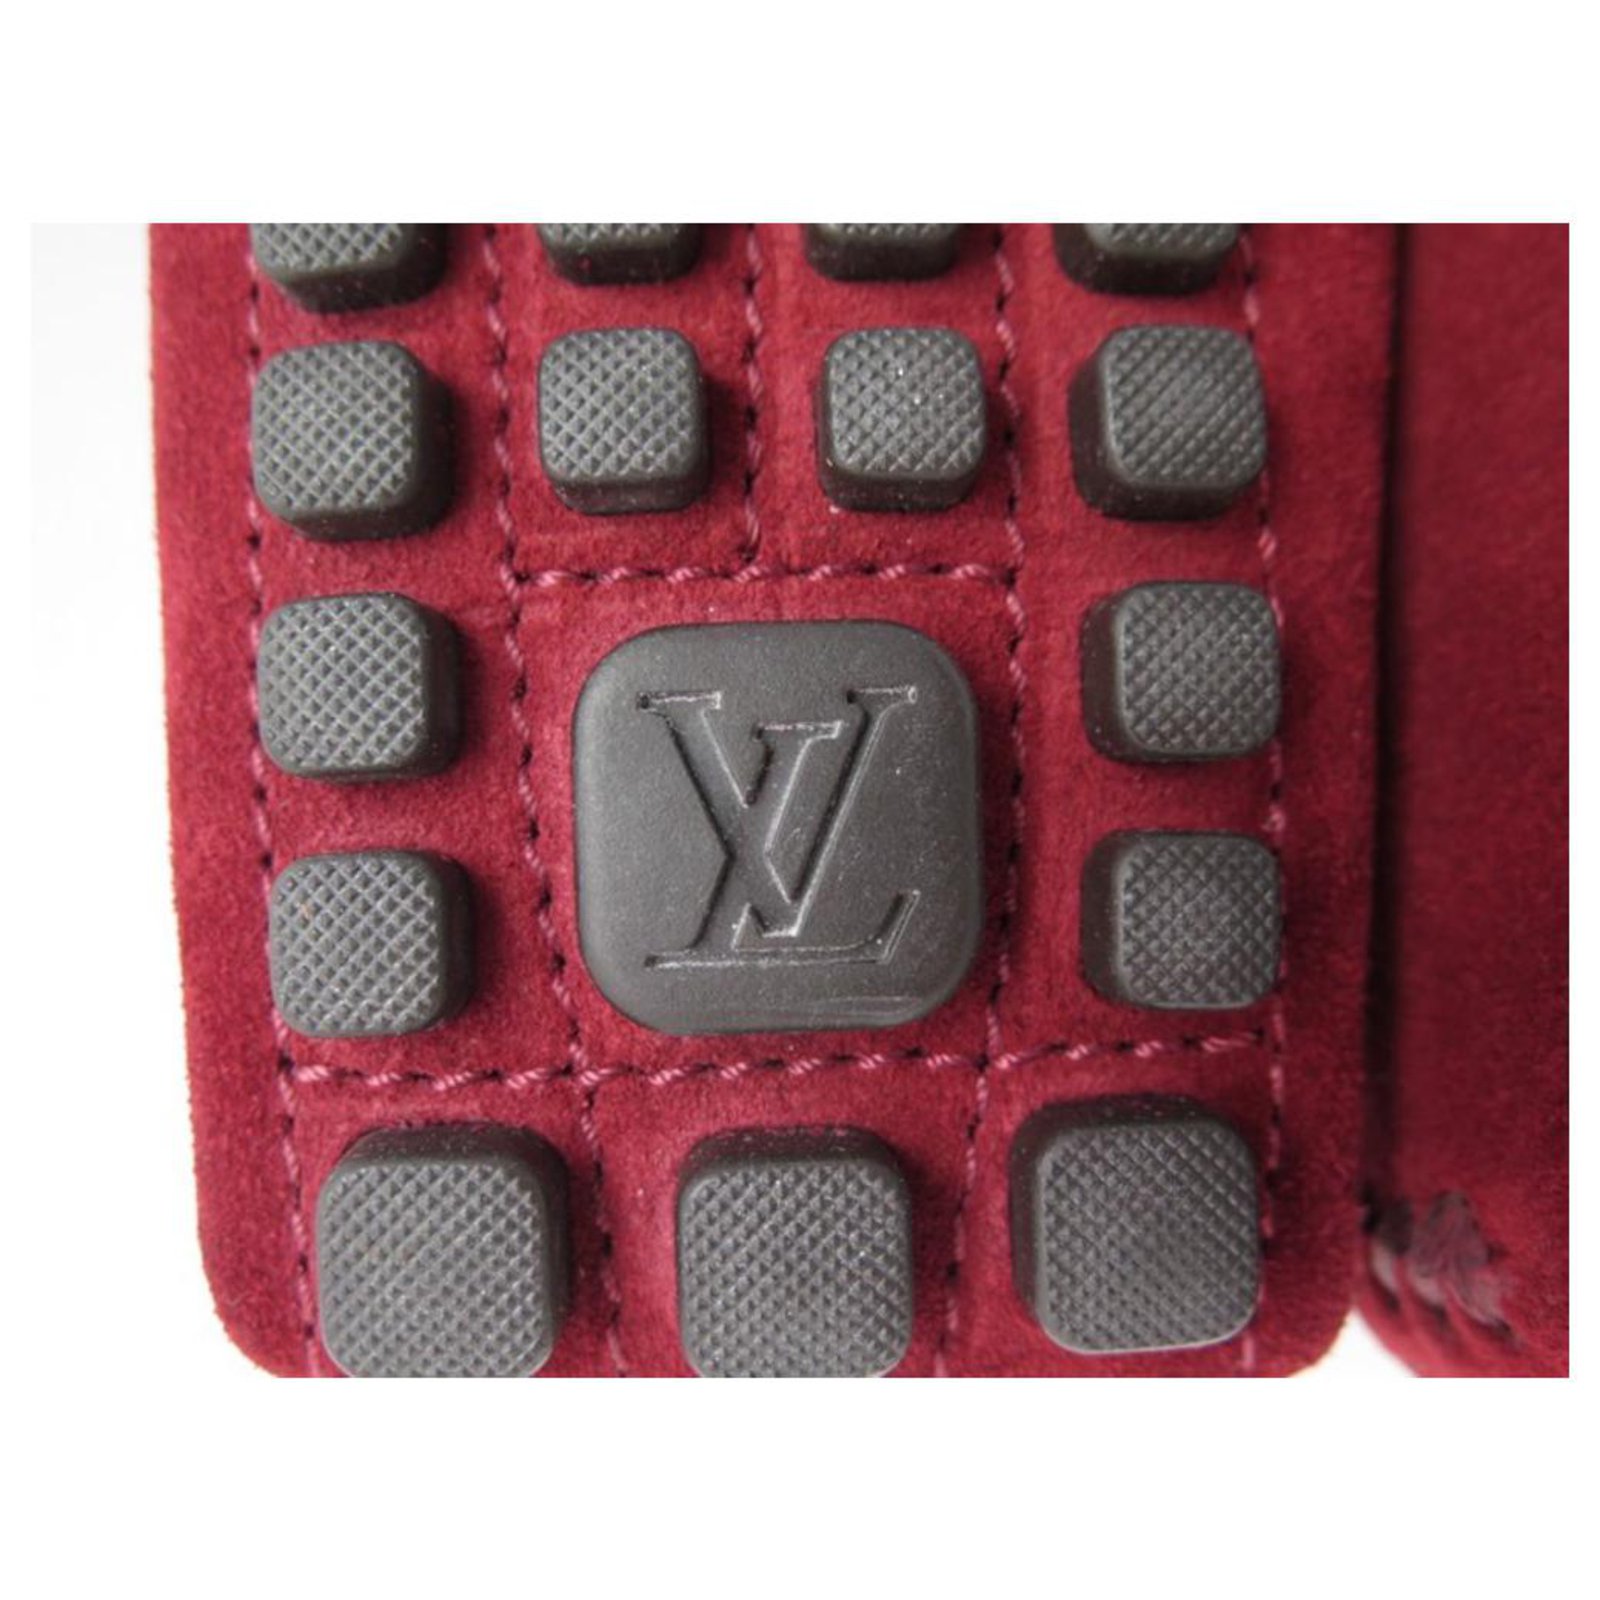 Louis Vuitton Multicolor Suede Arizona Slip On Loafers Size 42